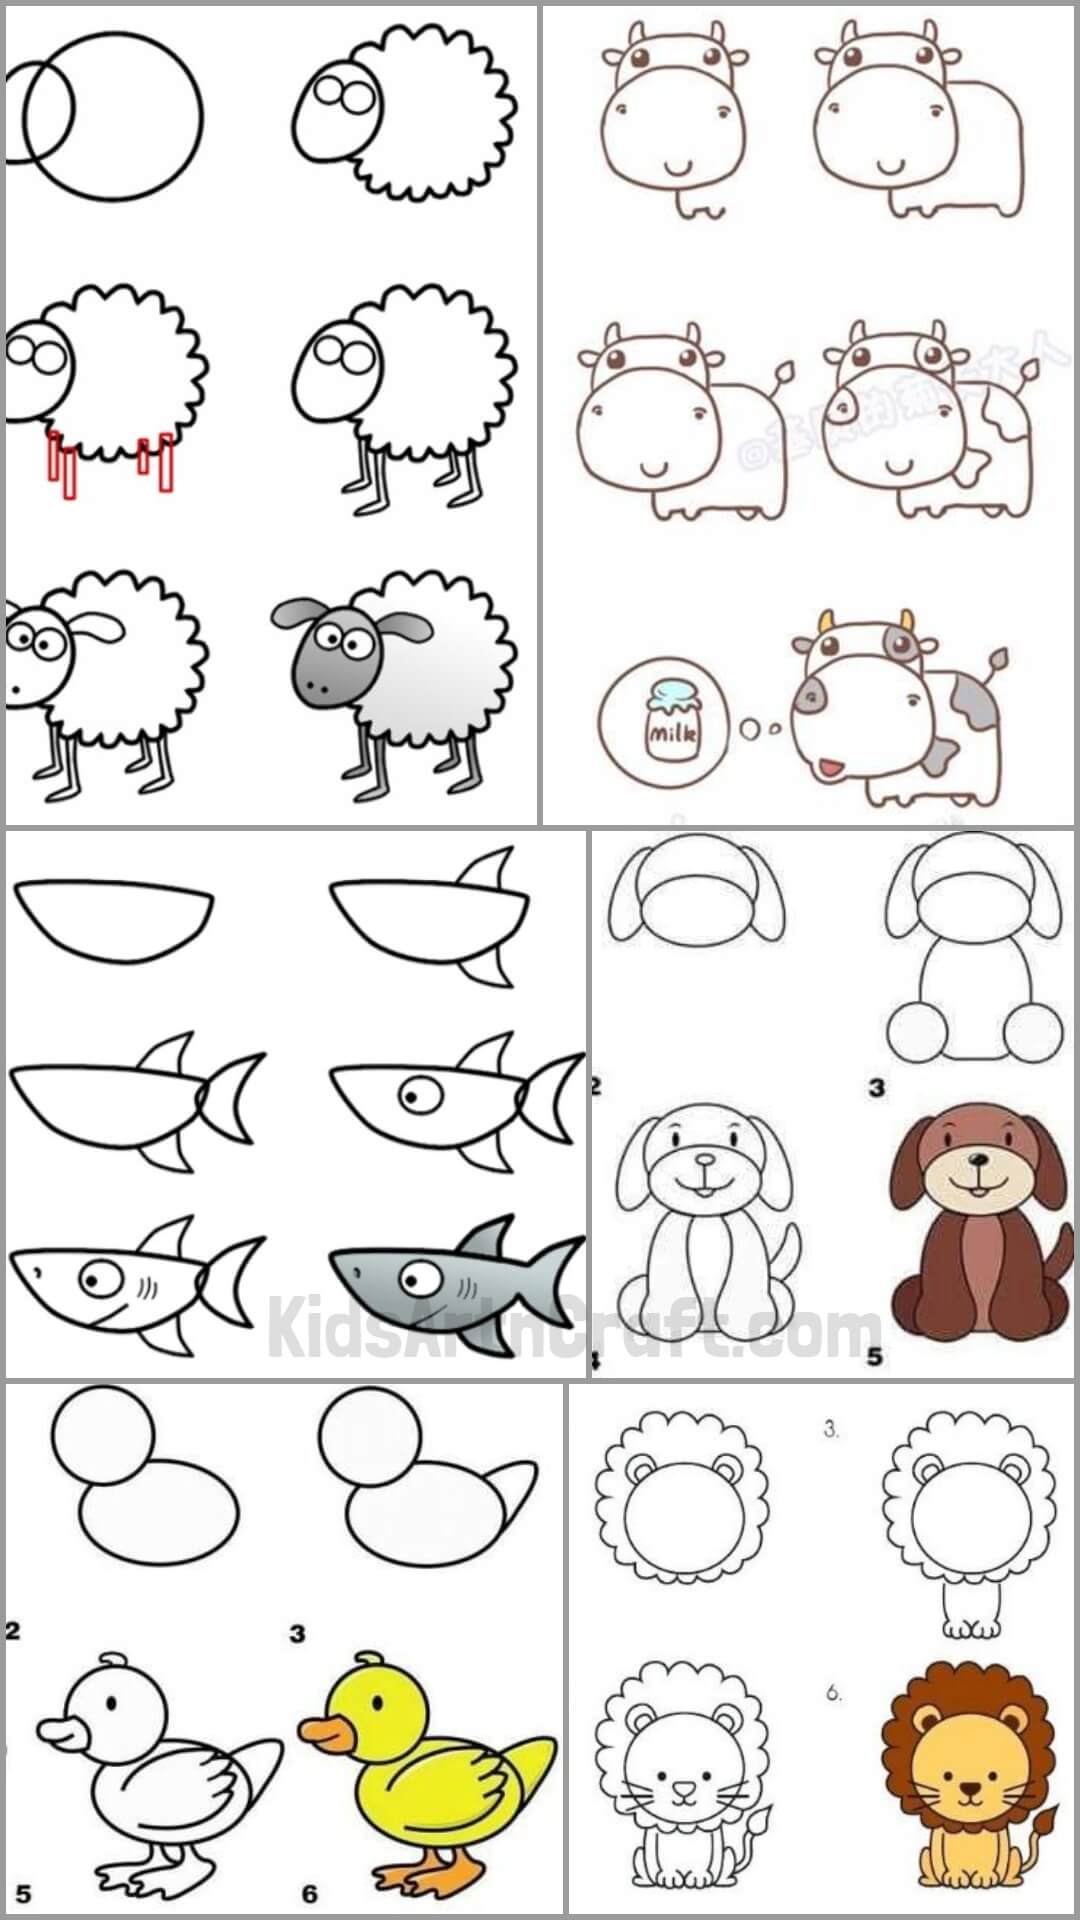 How to Draw an Animal - Drawingforall.net